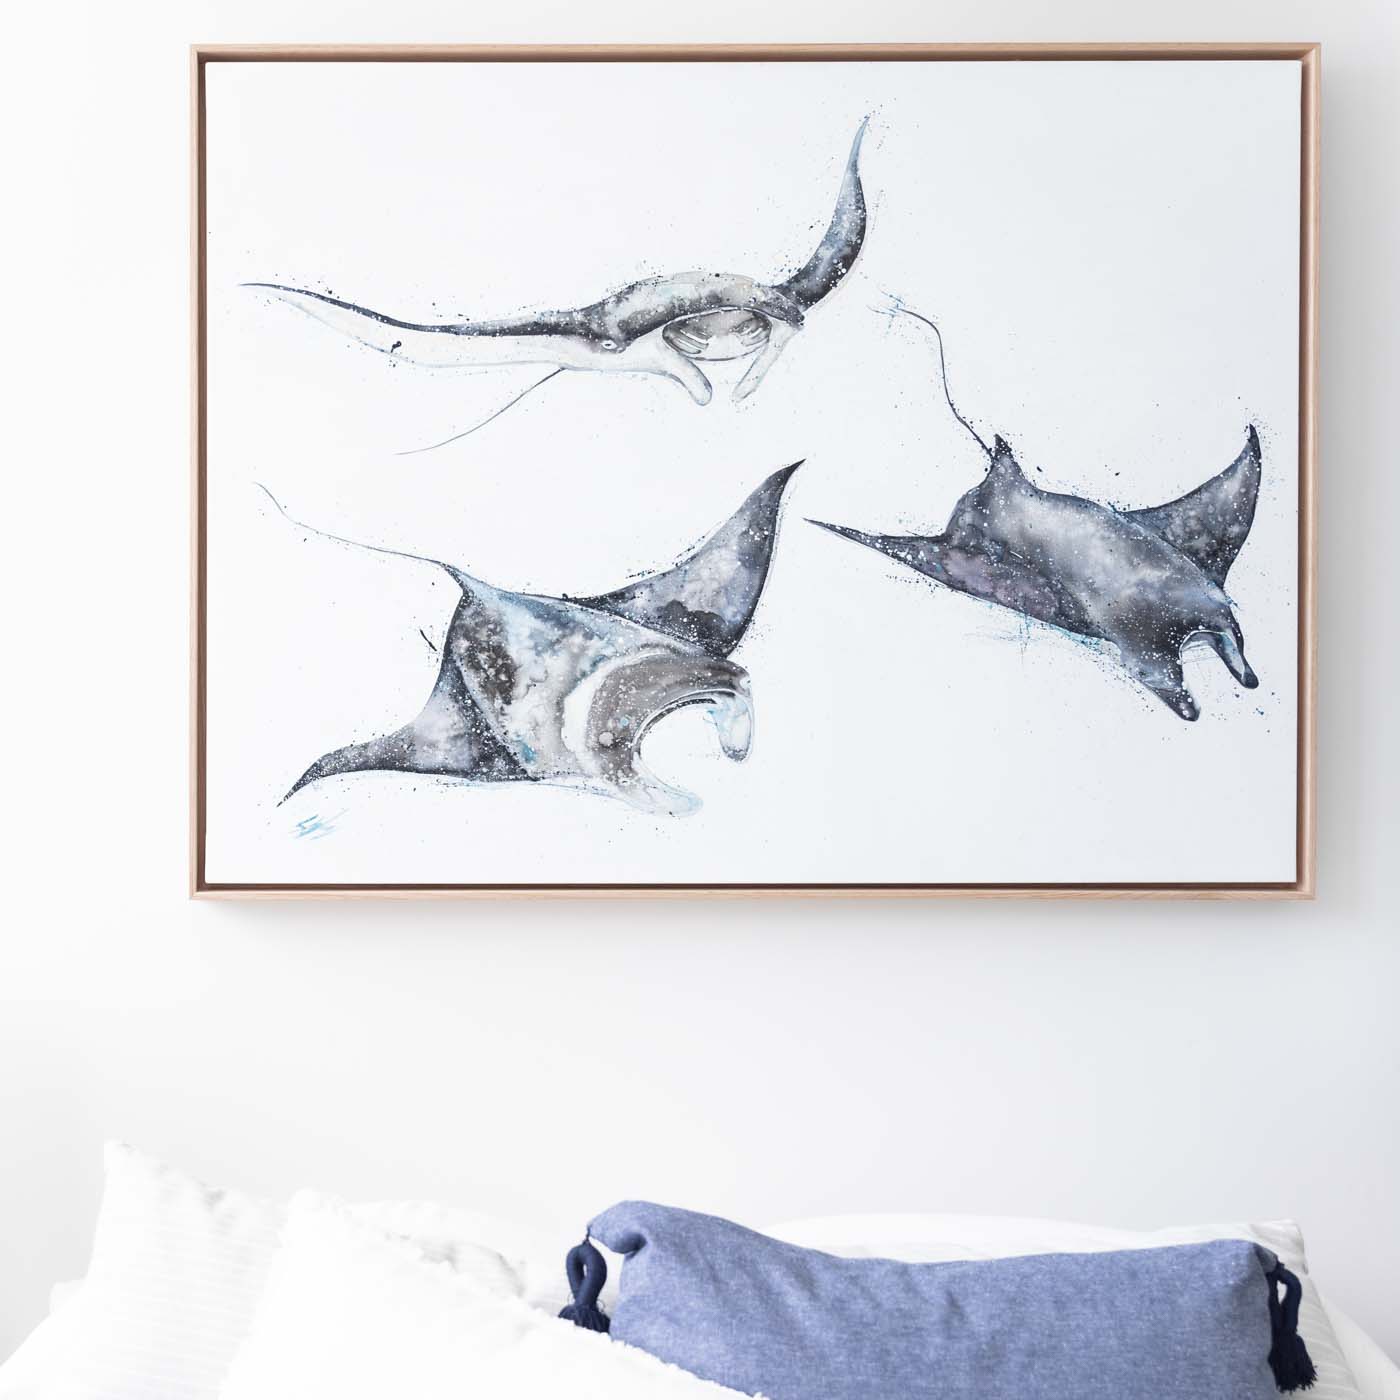 manta rays framed canvas print